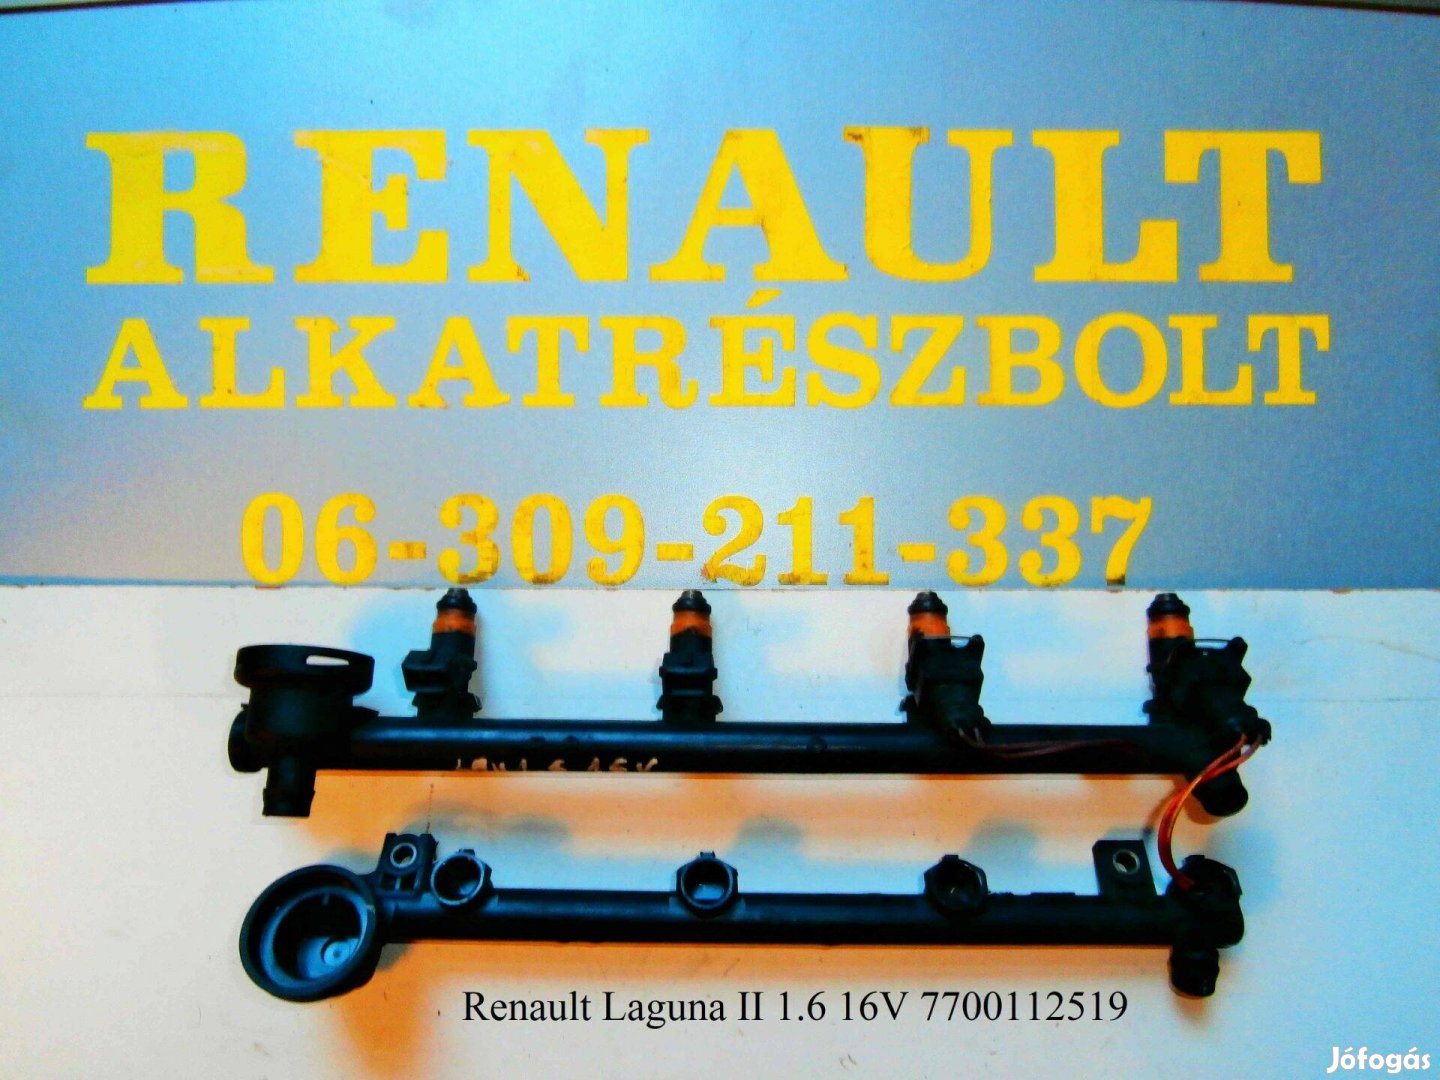 Renault Laguna II 1.6 16V 7700112519 injektor, injektor híd